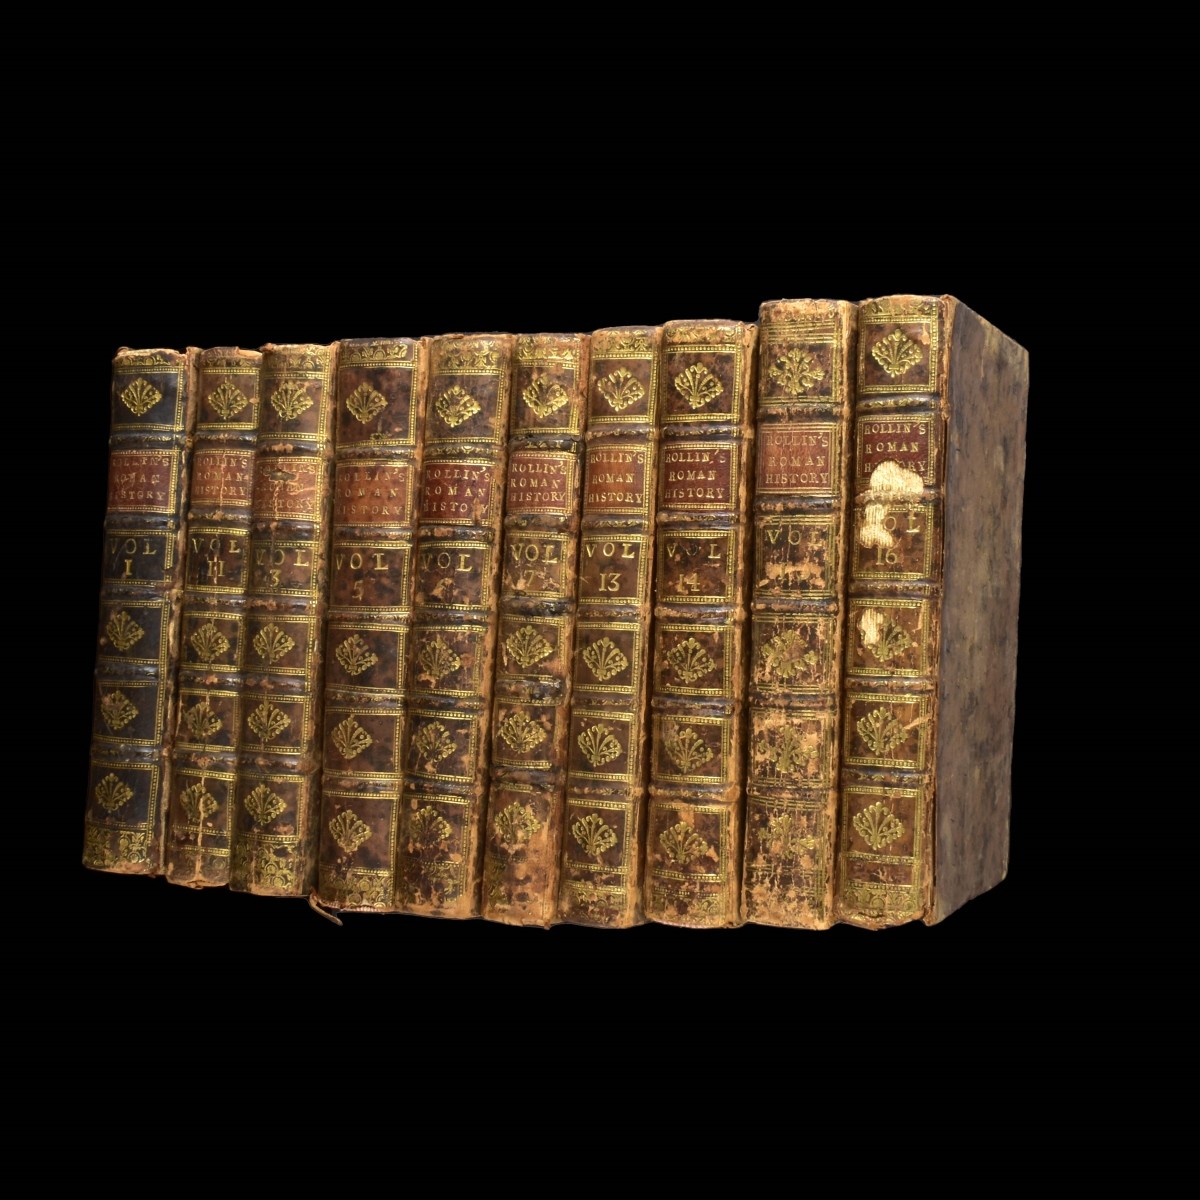 10 Volumes of Rollin's Roman History Books